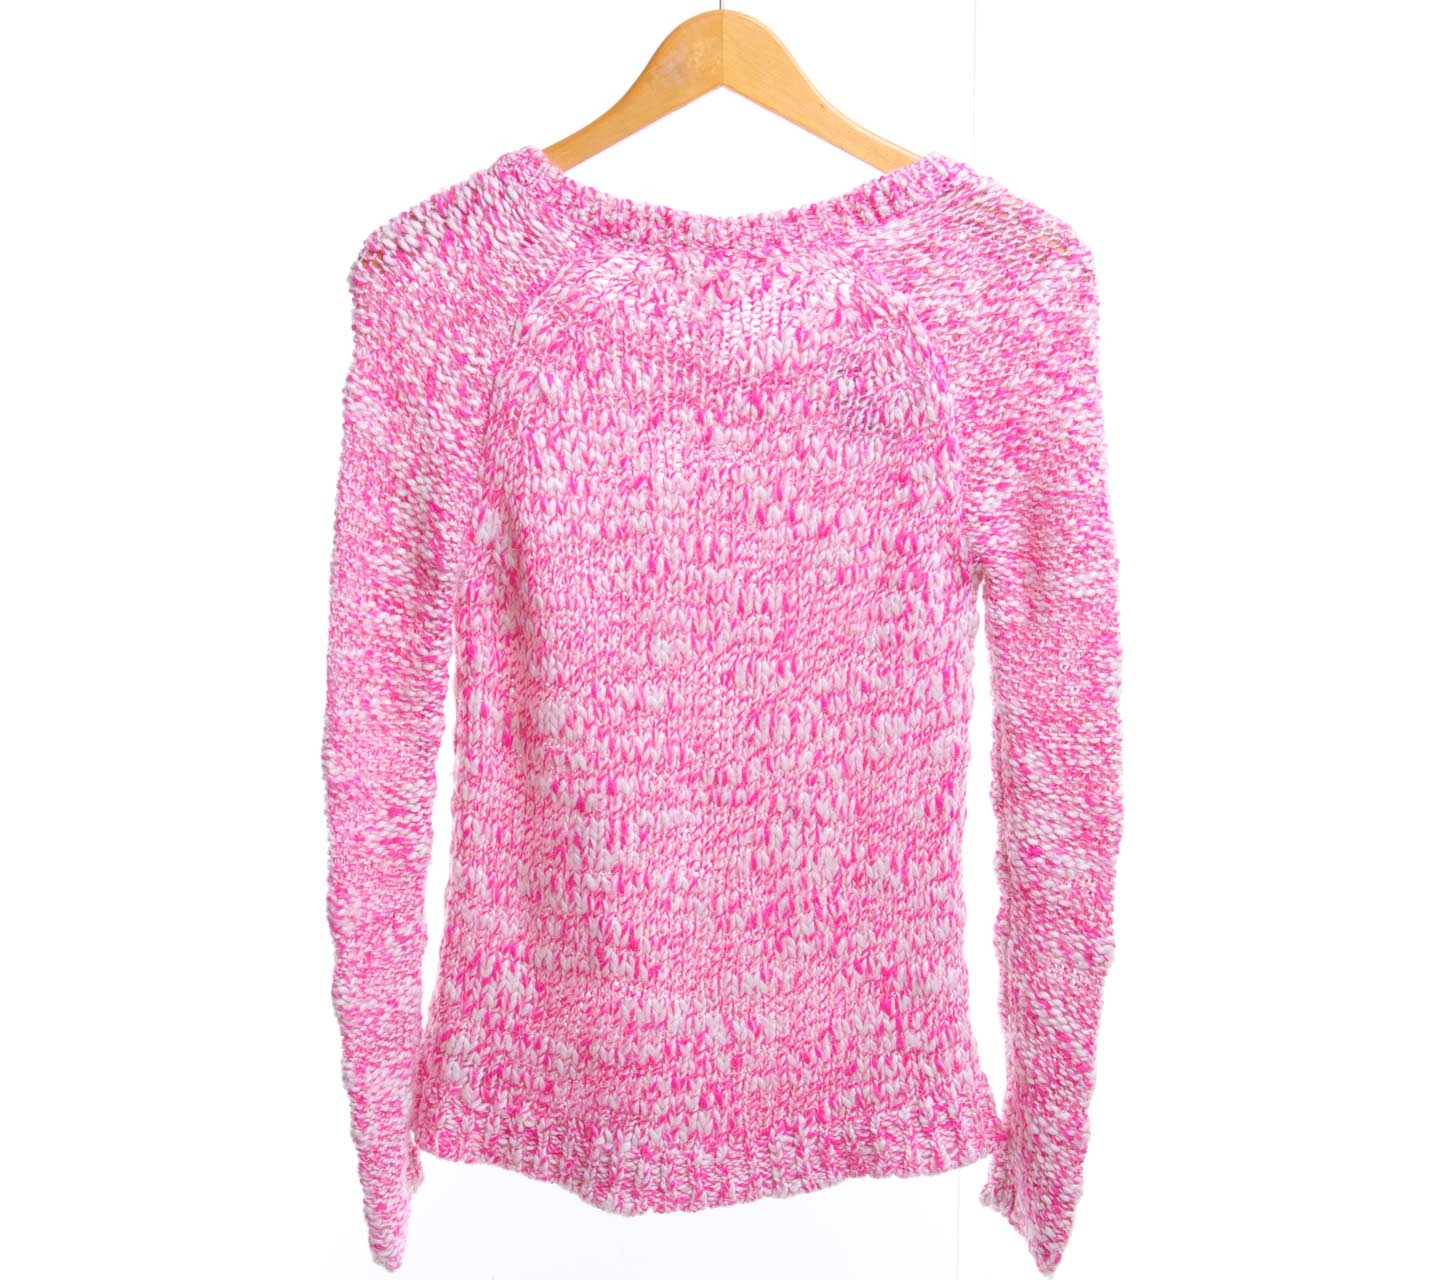 Aeropostale Pink Sweater